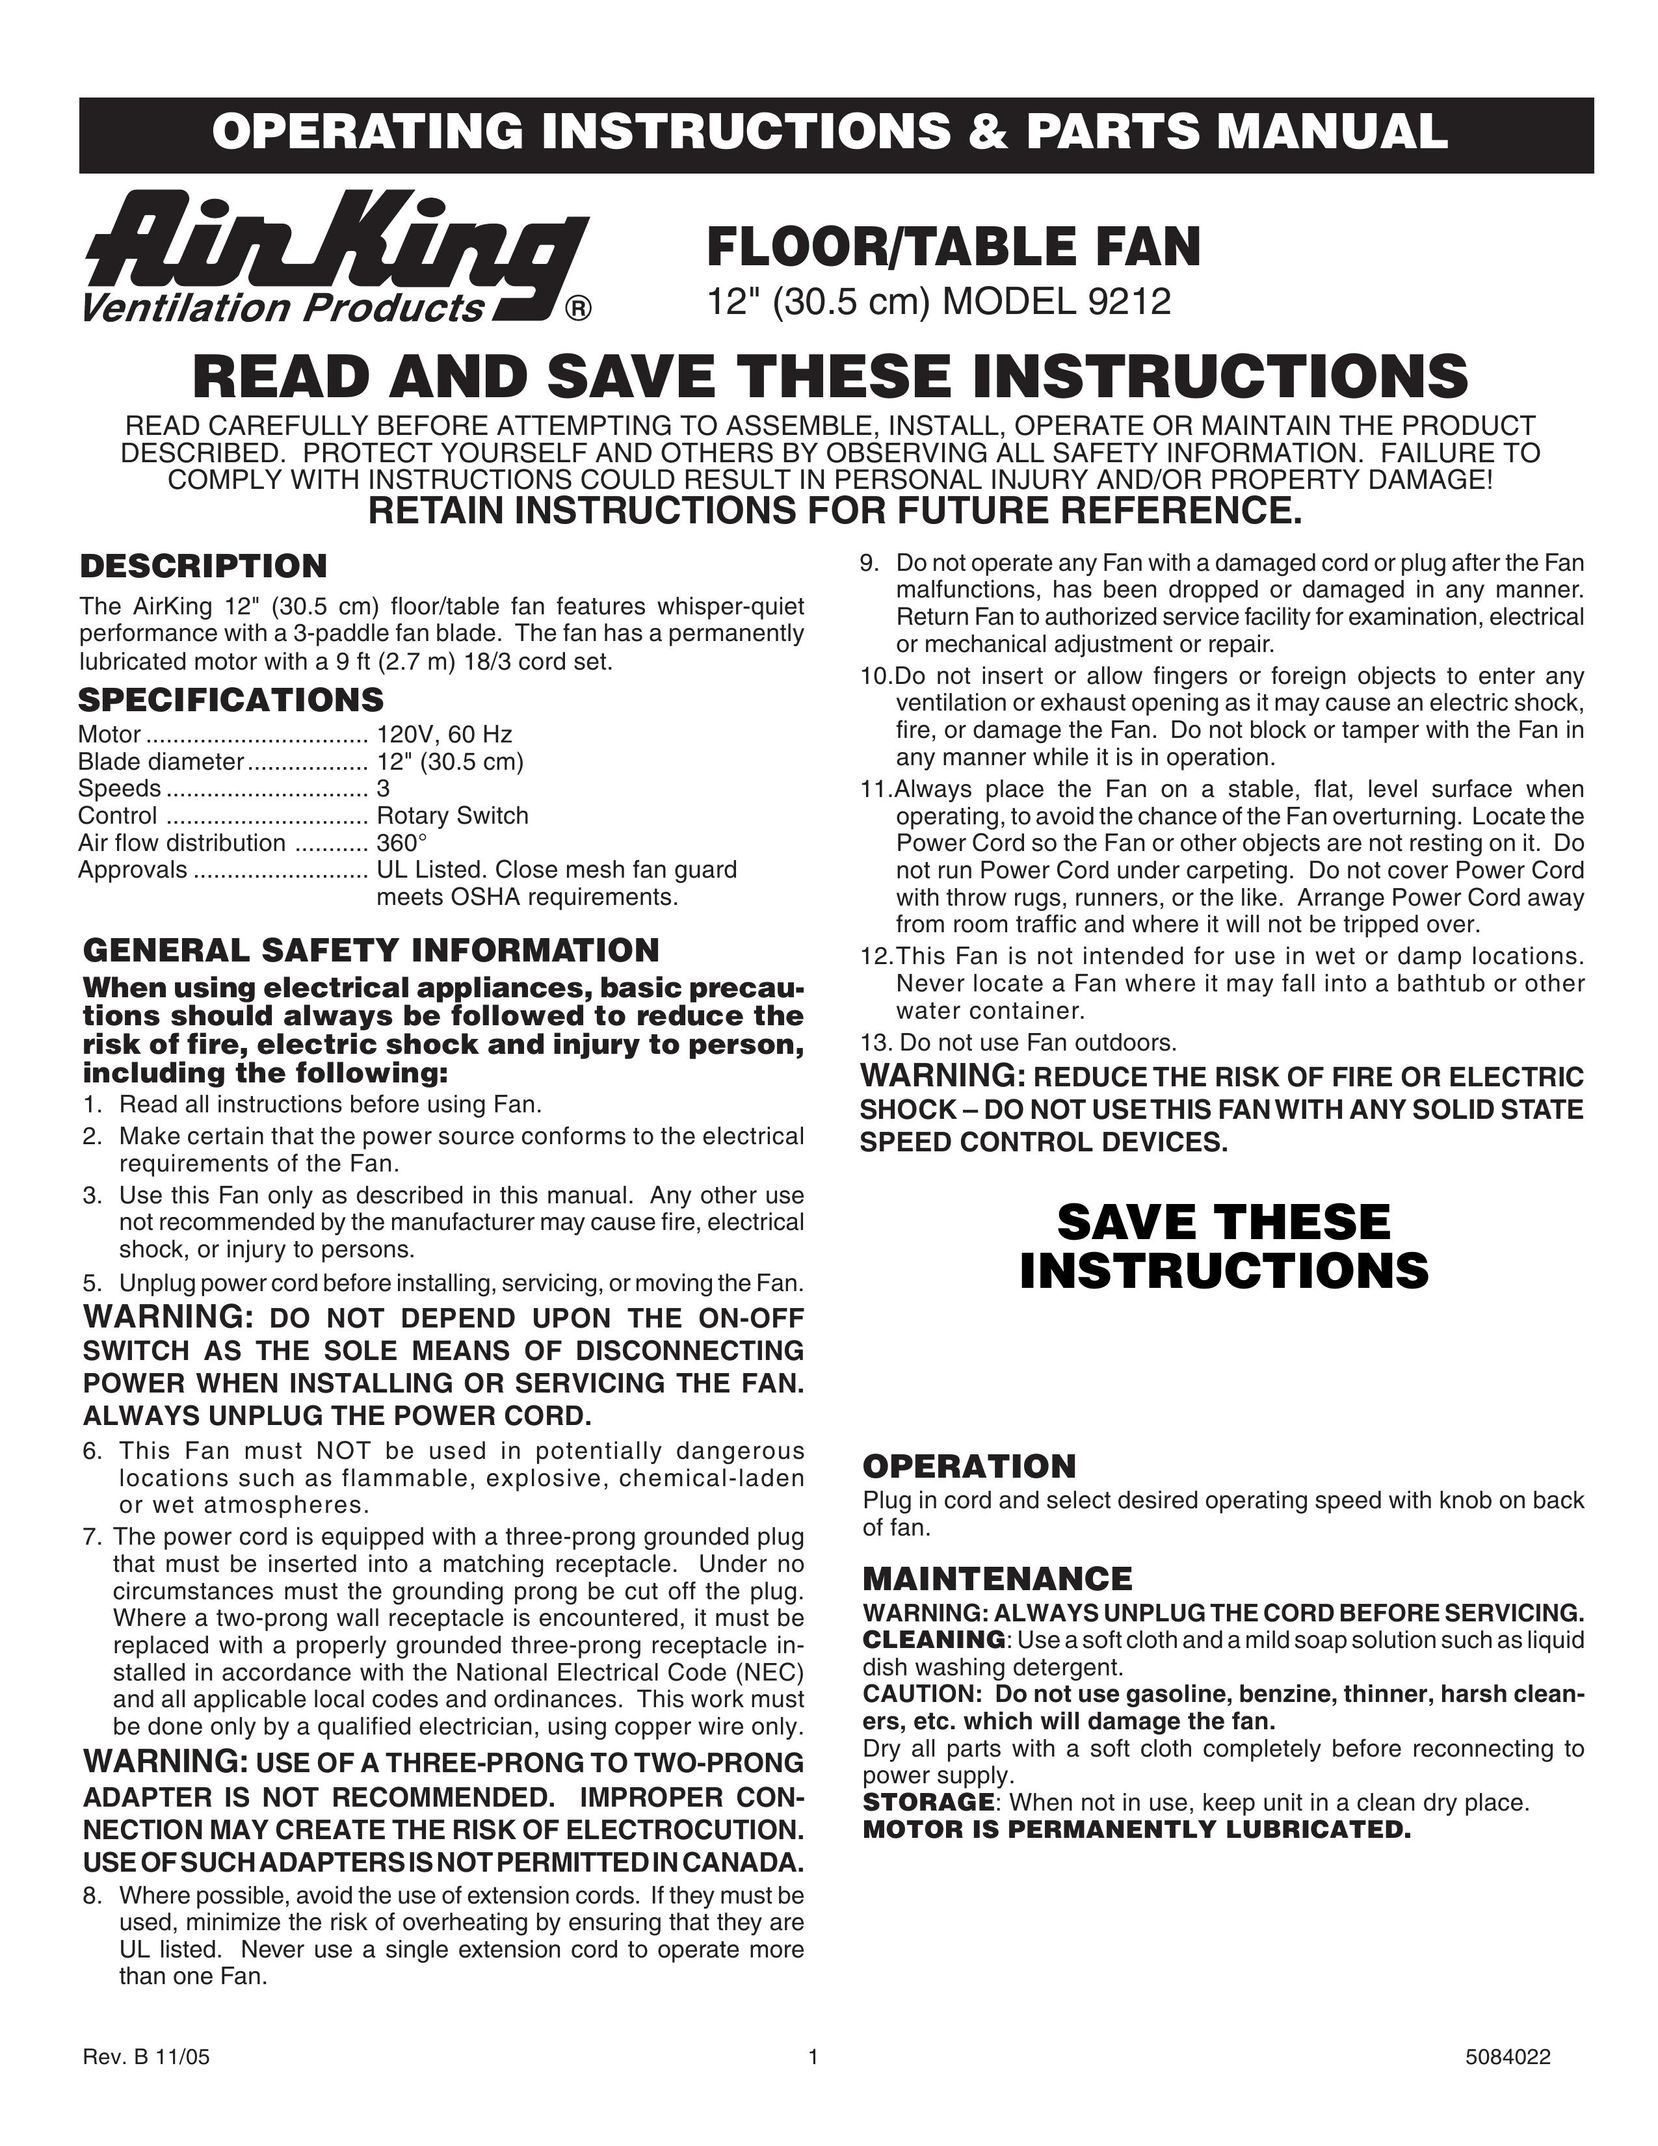 Air King 9212 Fan User Manual